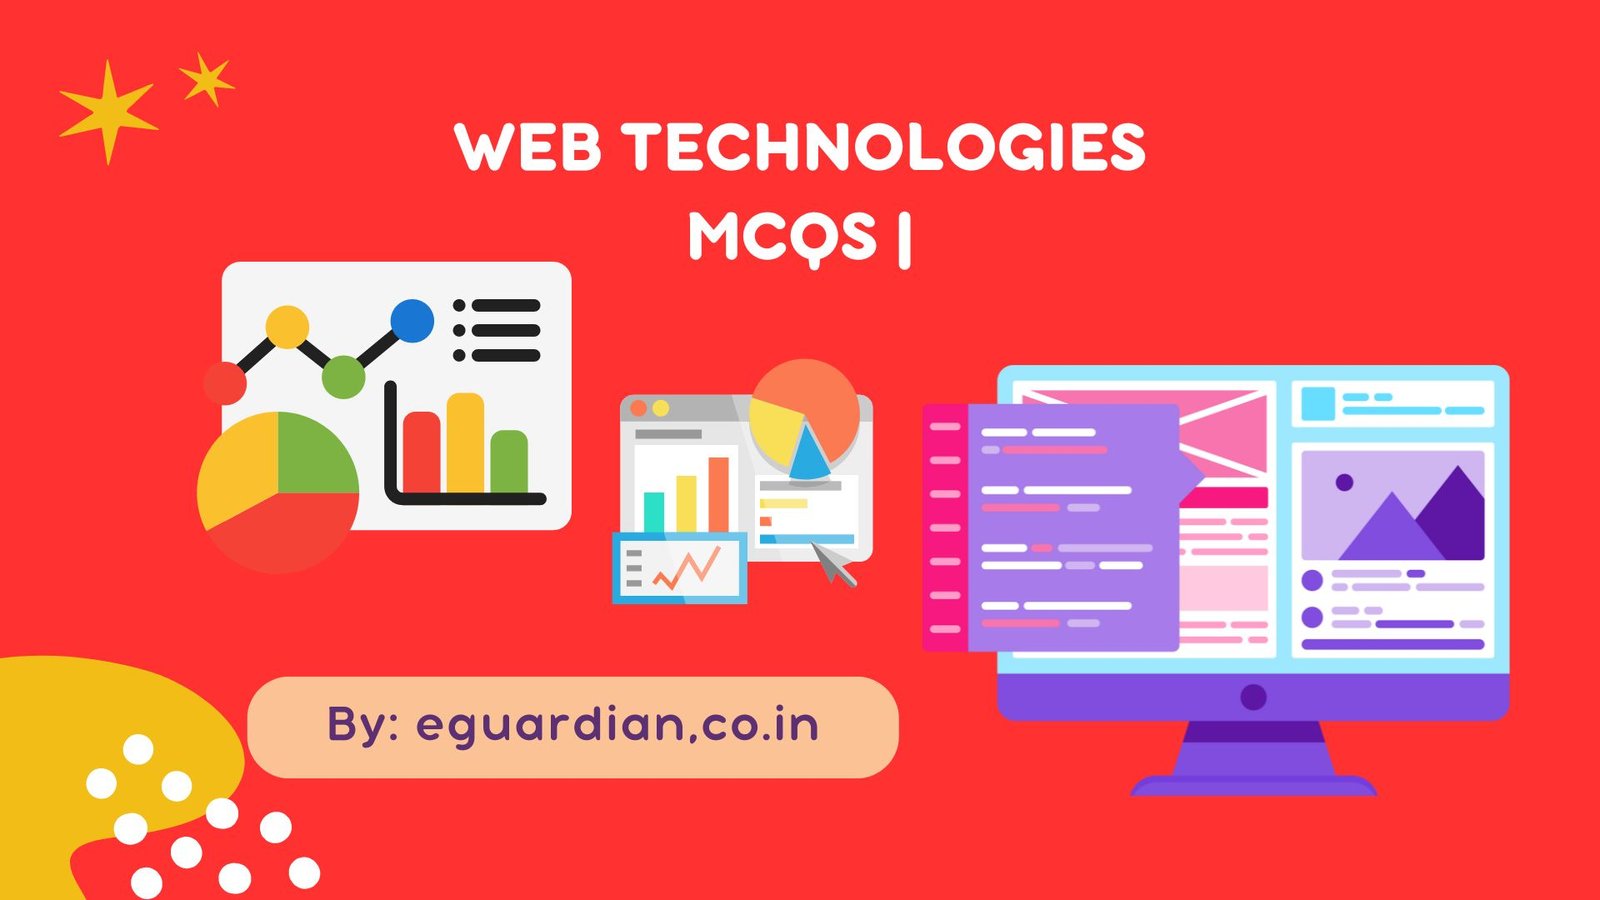 Web Technologies MCQ  Web technology mcq questions and answers pdf